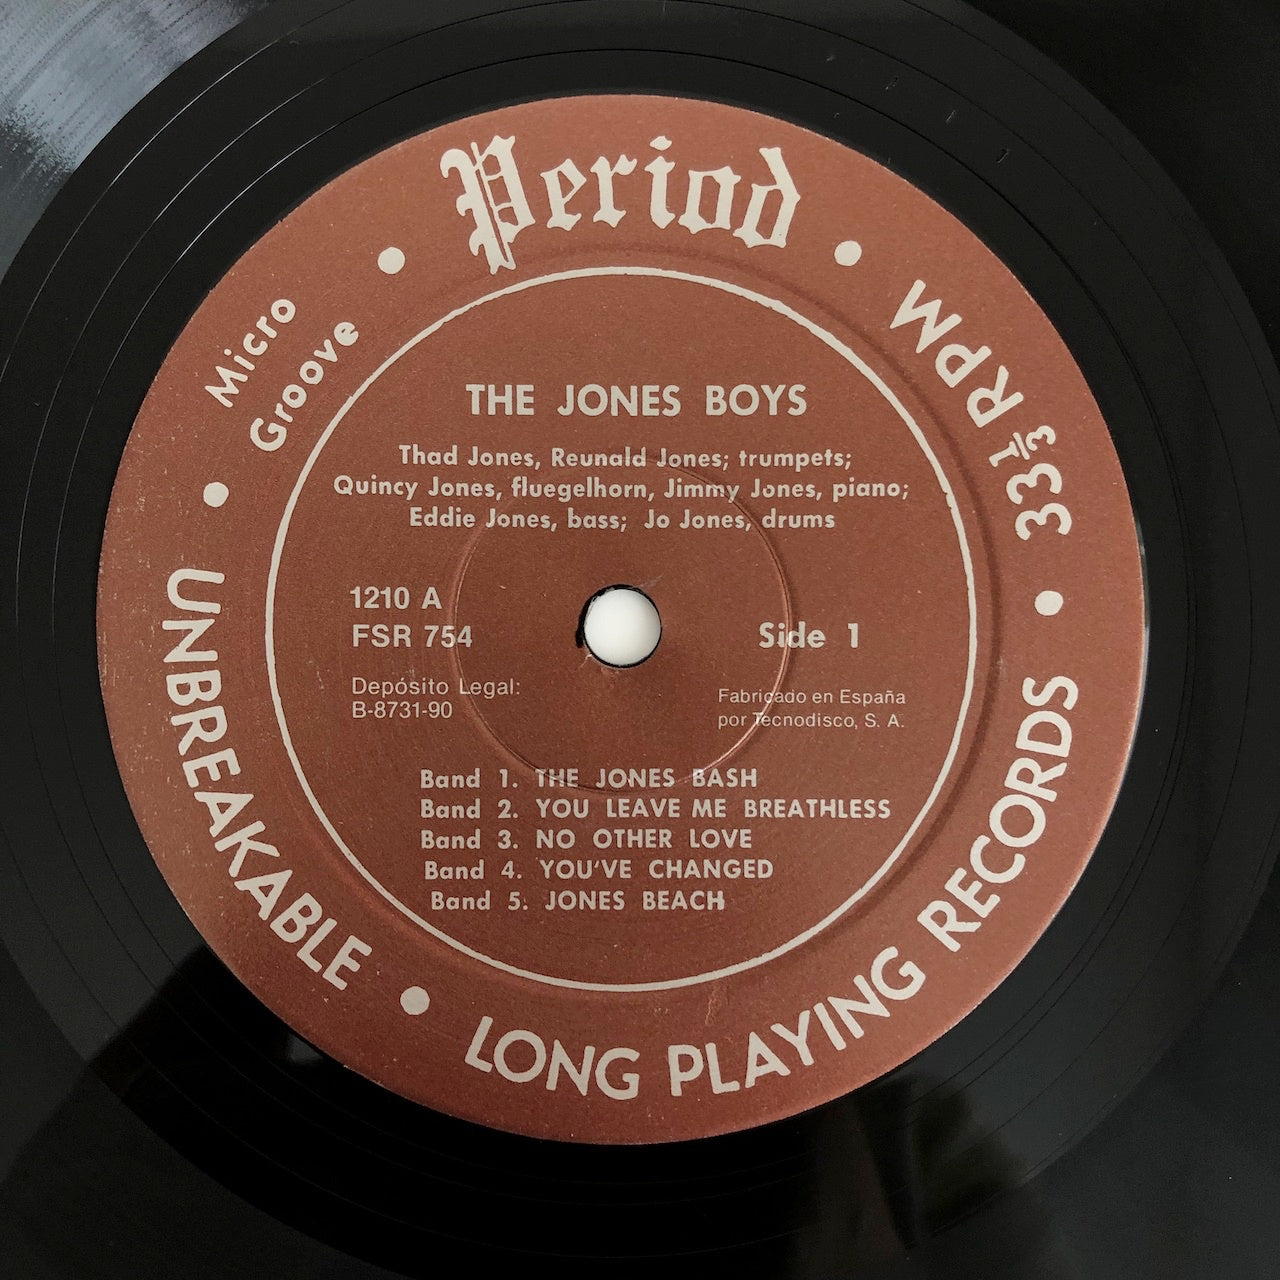 LP/ THE JONES BOYS / THE WHOLE TOWN'S TALKING ABOUT THE JONES BOYS / スペイン盤 コーティングJK FRESH SOUND RECORDS FSR754